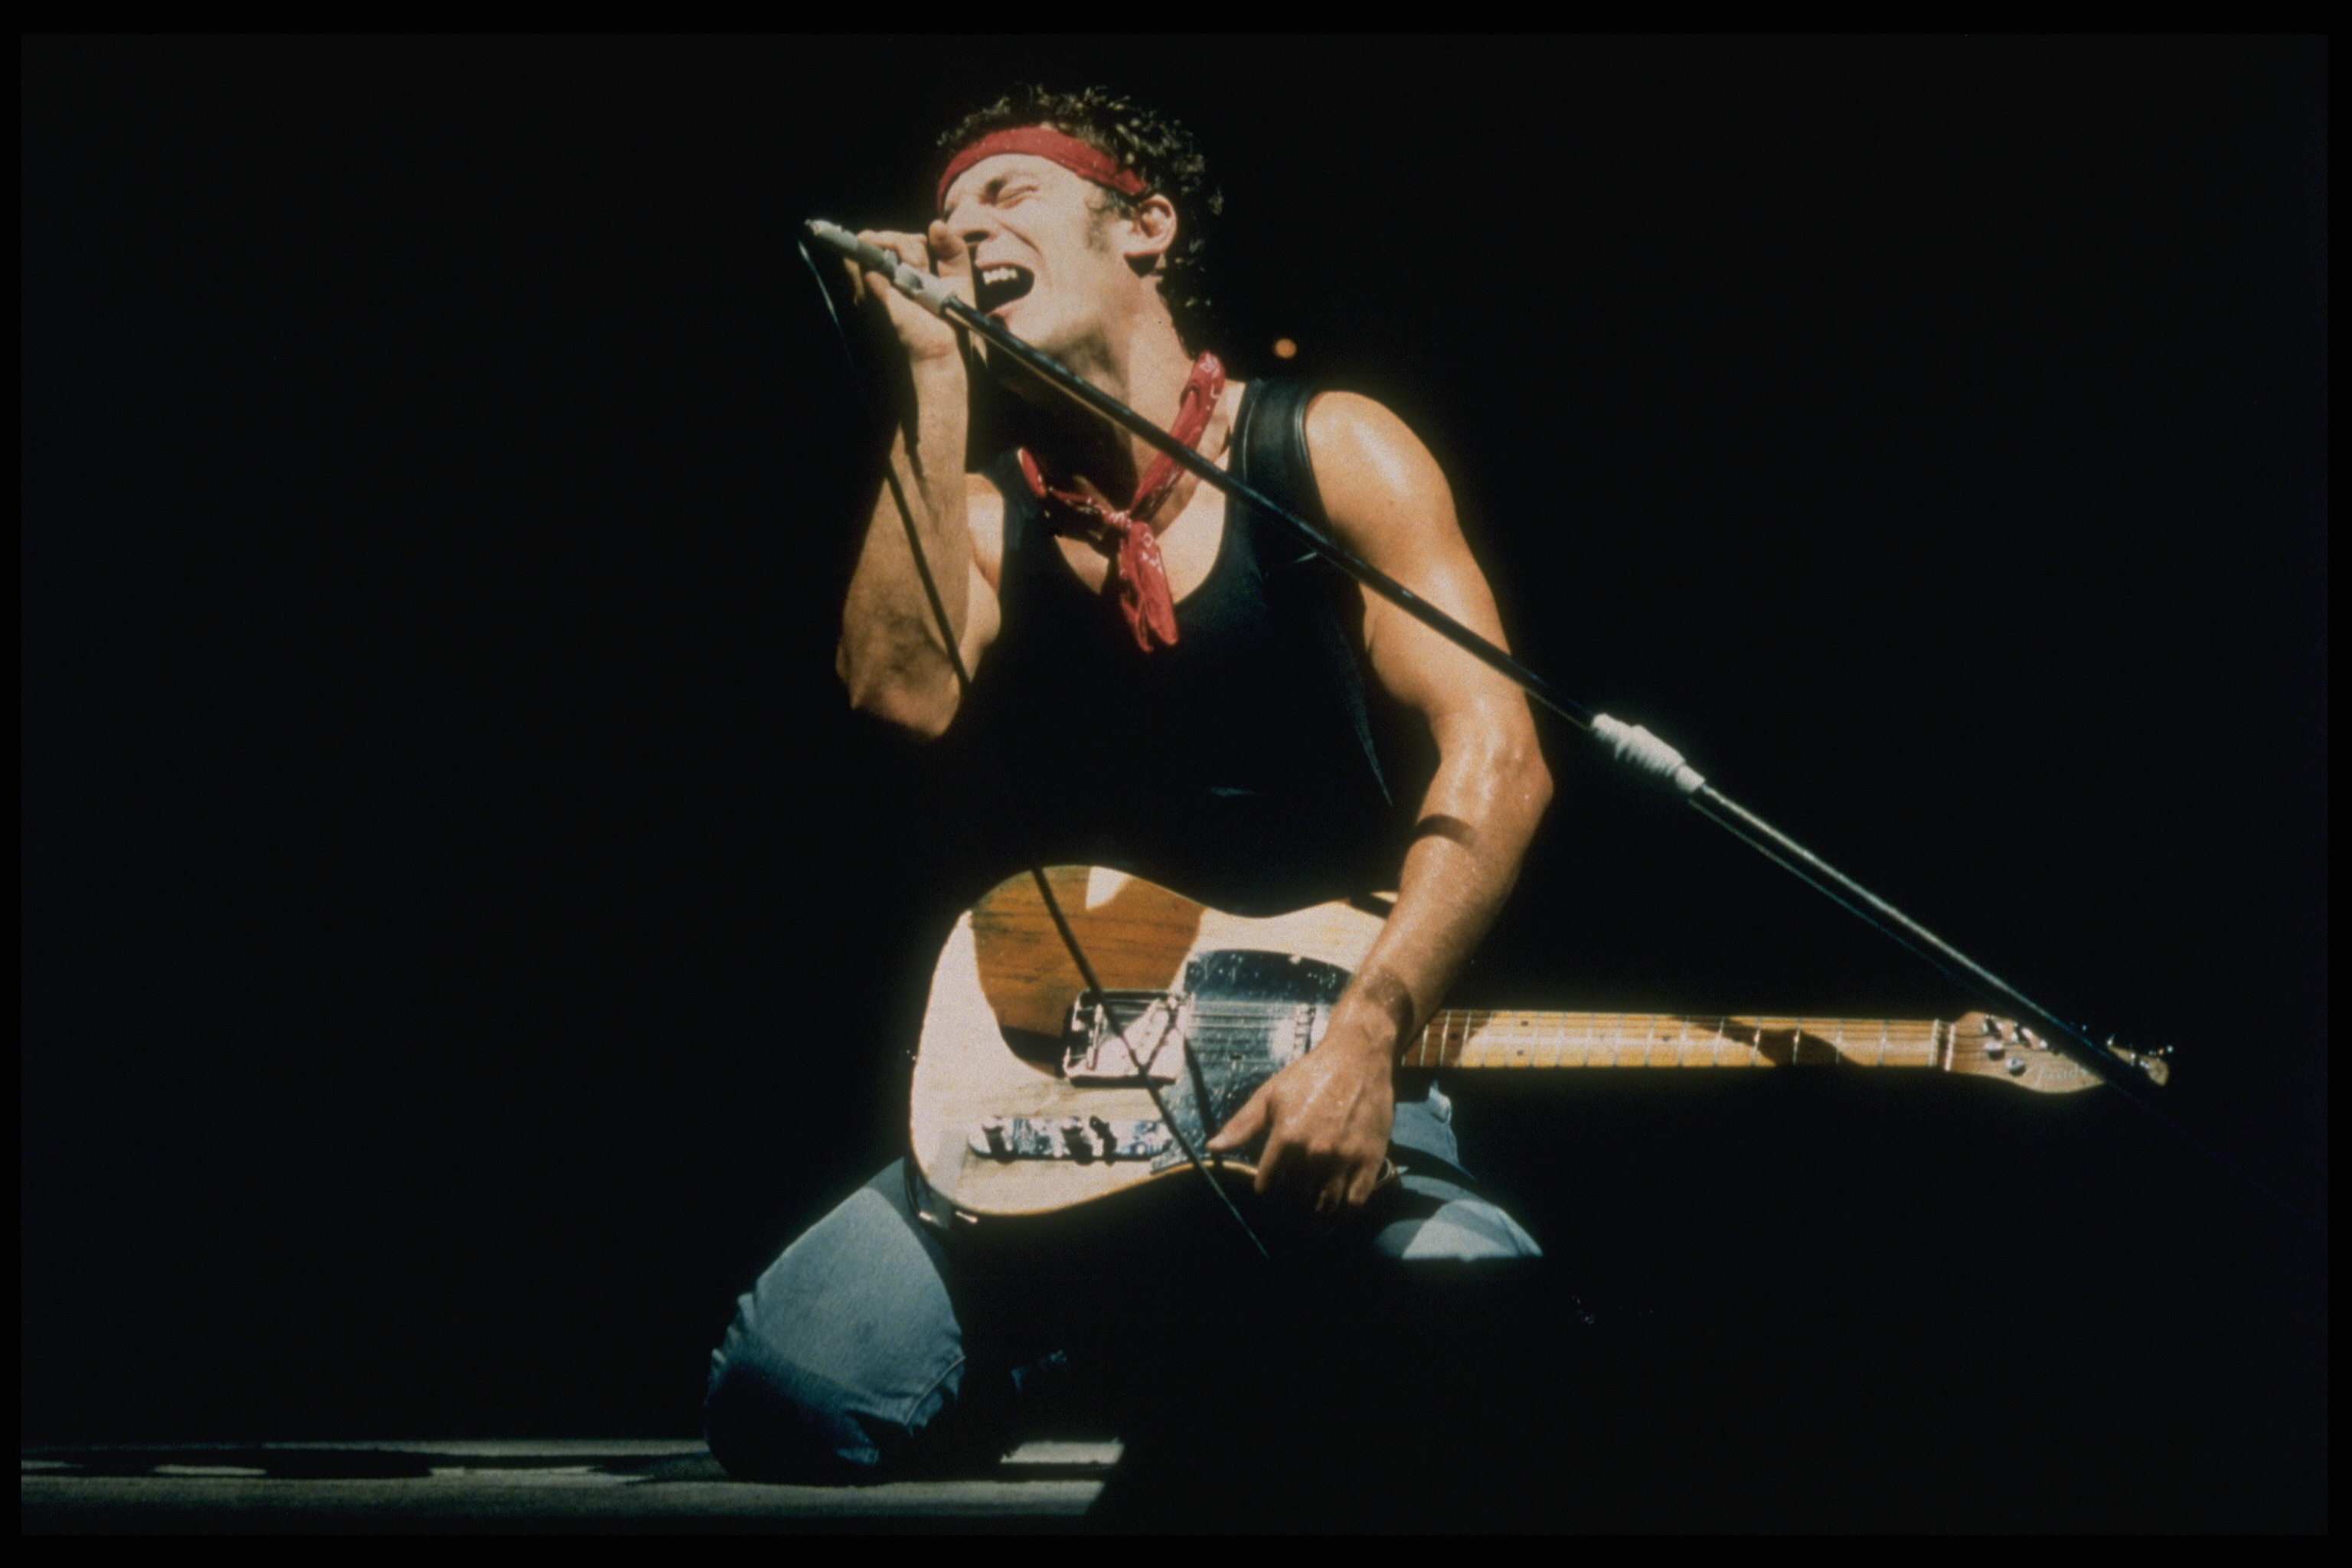 Bruce Springsteen sur scène en 1994 | Source : Getty images